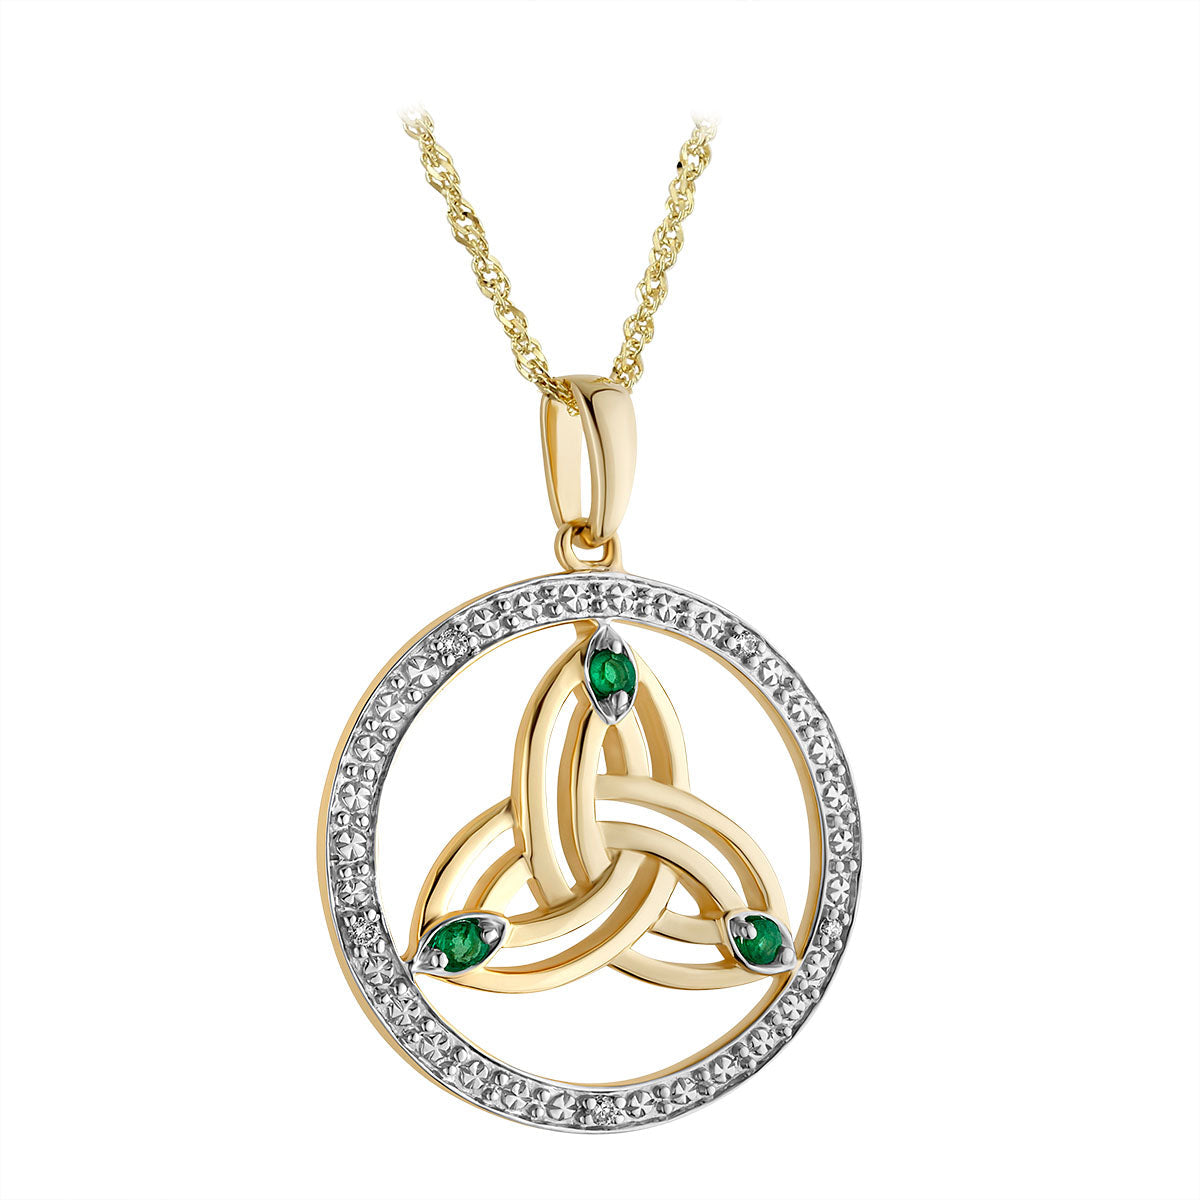 14 karat White & Yellow Gold Diamond & Emerald Round Trinity Knot Necklace S46786 on 18 inch 14 karat gold Sing chain from Solvar